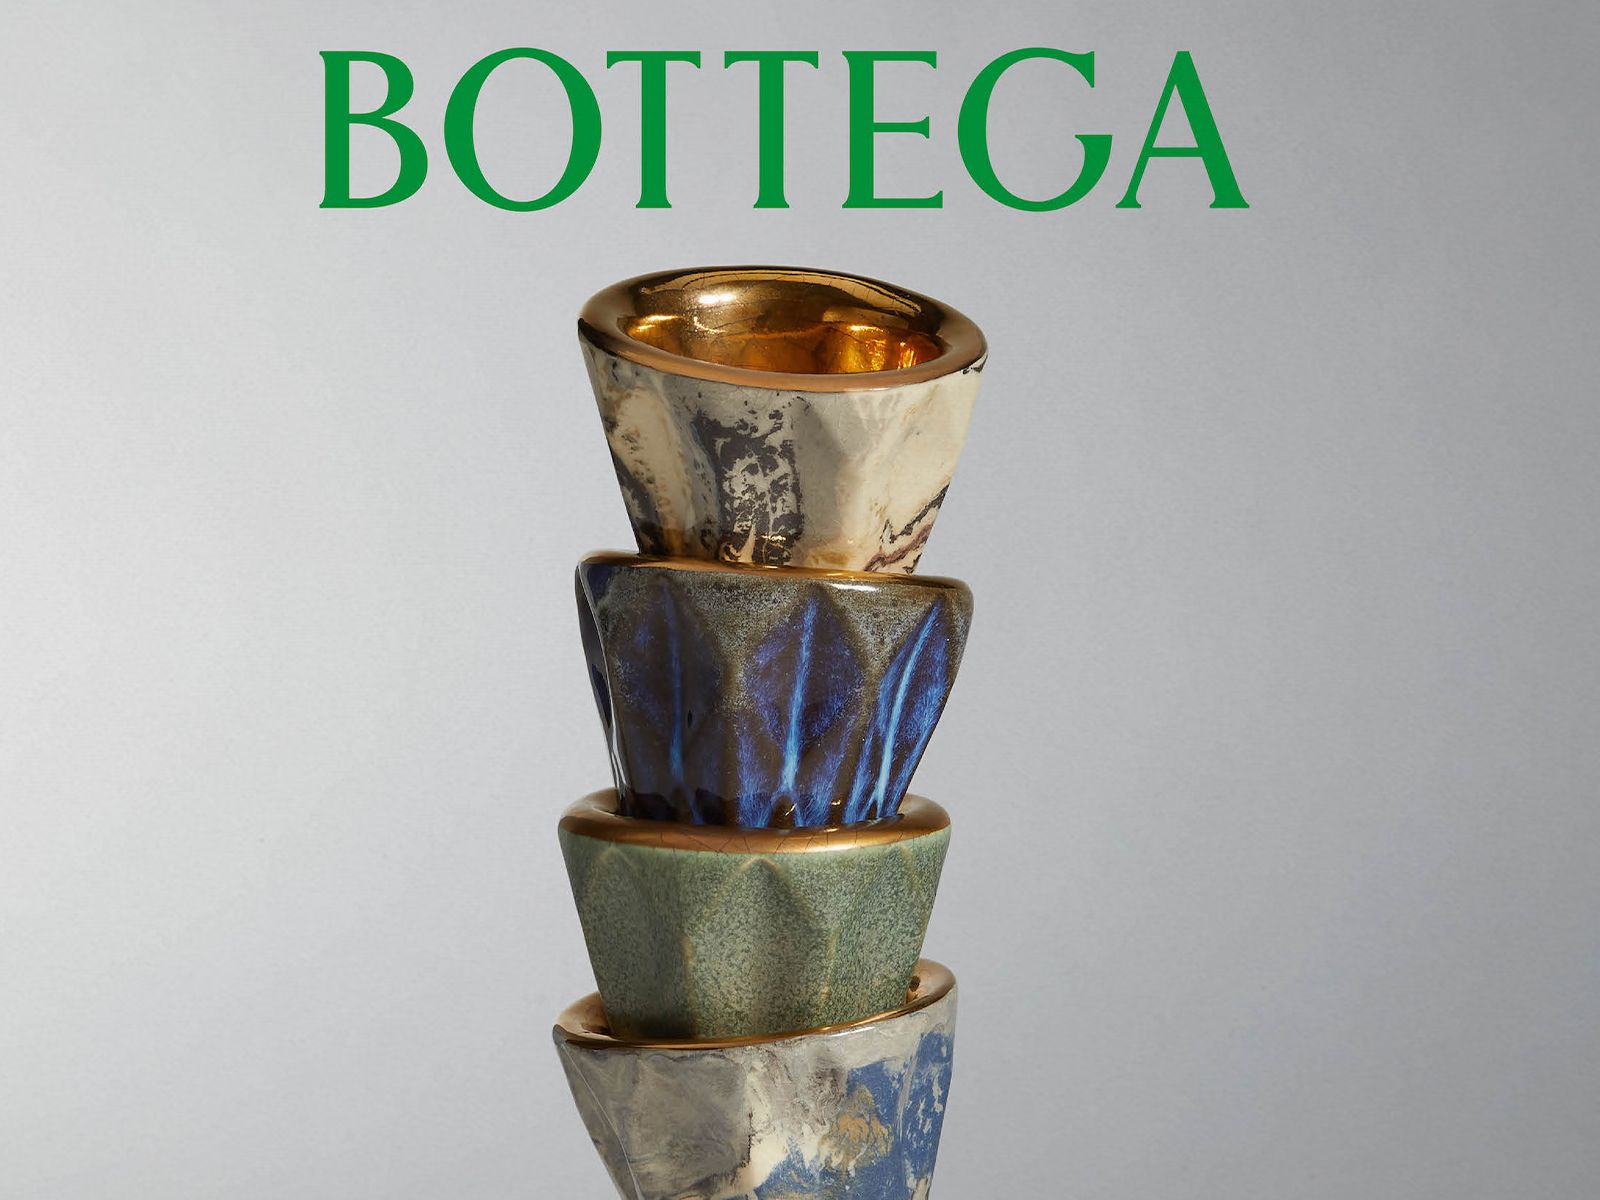 Bottega For Bottegas: All about Bottega Veneta’s new project